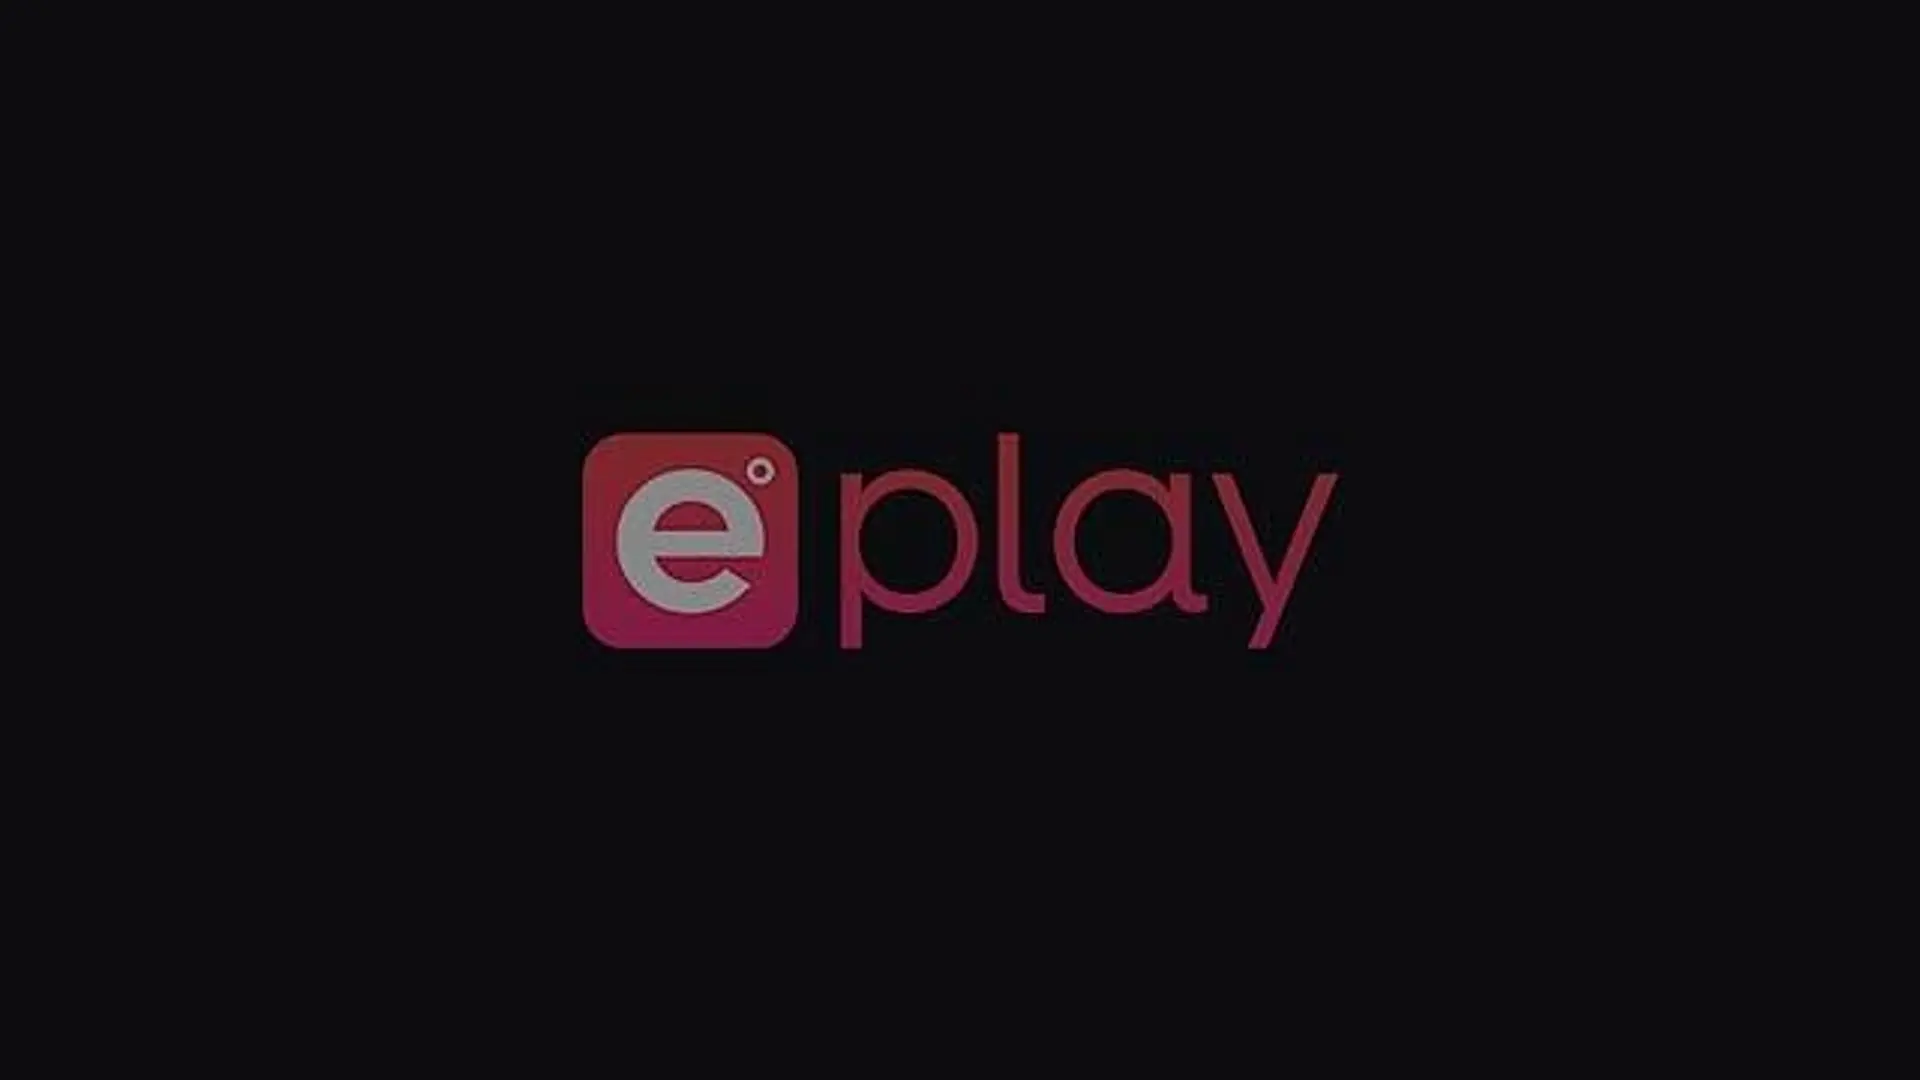 SunnyLana's ePlay Channel